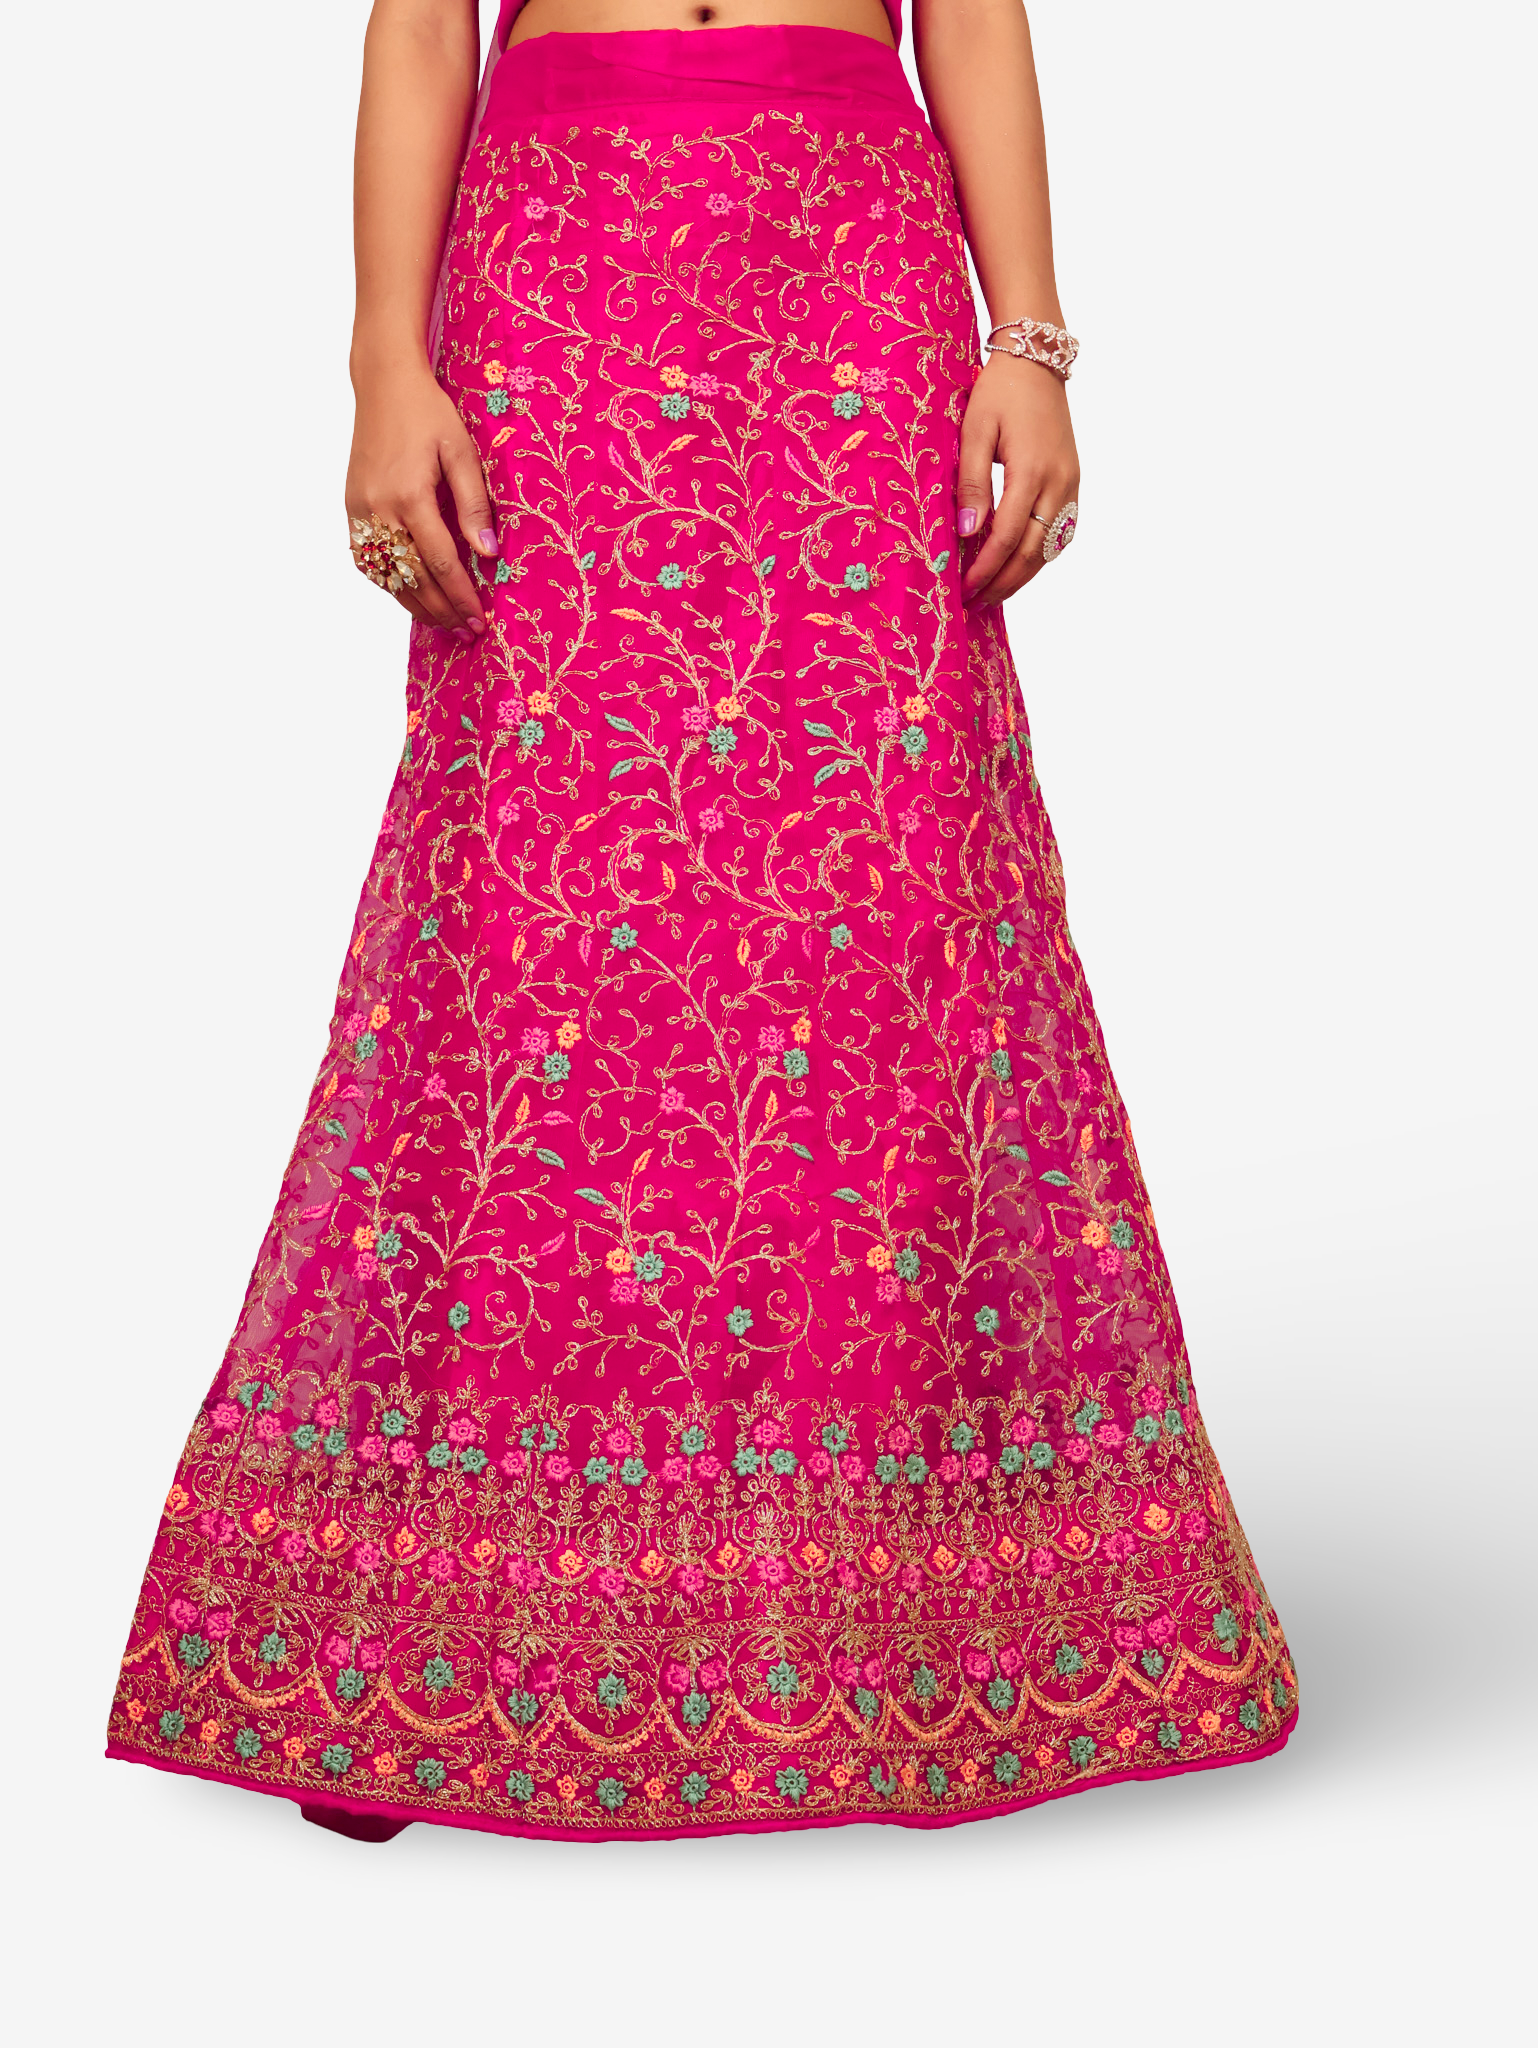 Semi-Stitched Lehenga with Embroidery &amp; Zari Thread Work by Shreekama Magenta Pink Semi-Stitched Lehenga for Party Festival Wedding Occasion in Noida